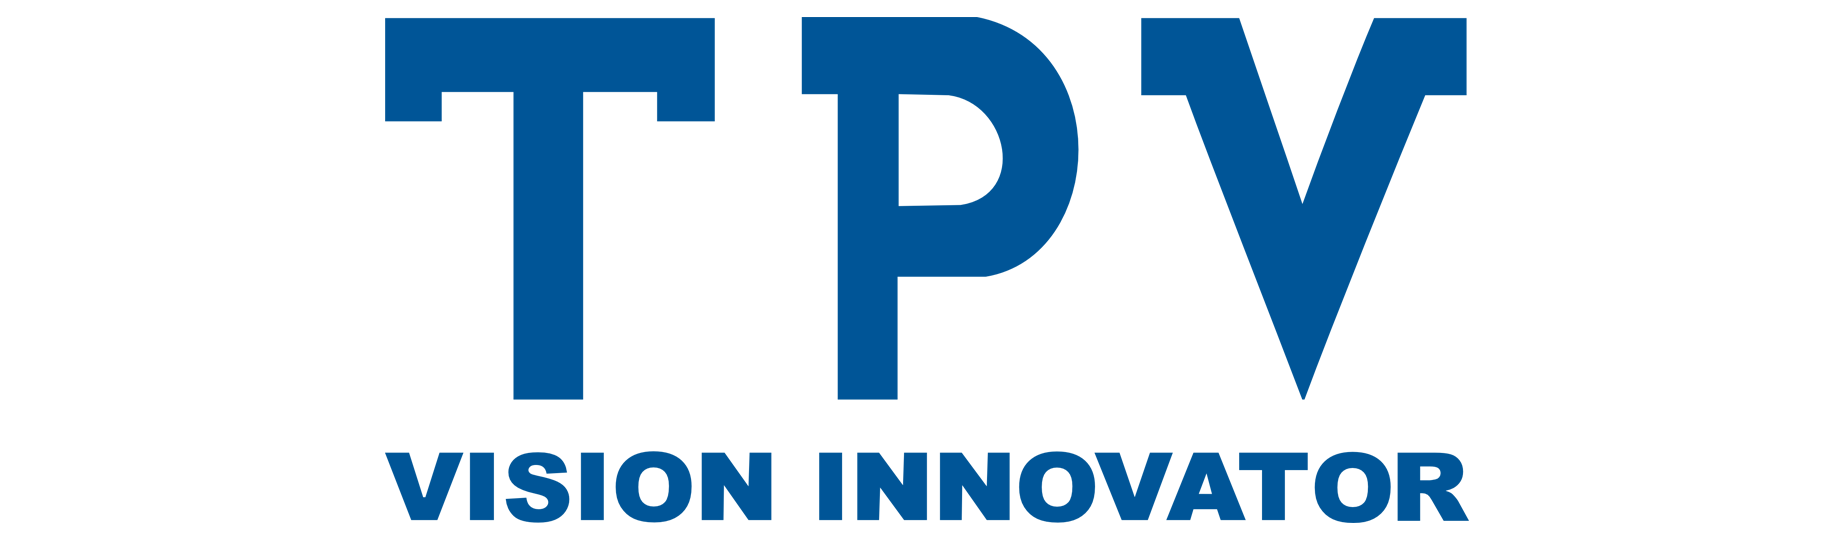 TPV логотип. TPV CIS лого. Завод TPV В Санкт-Петербурге. TPV CIS Vision Innovator лого.